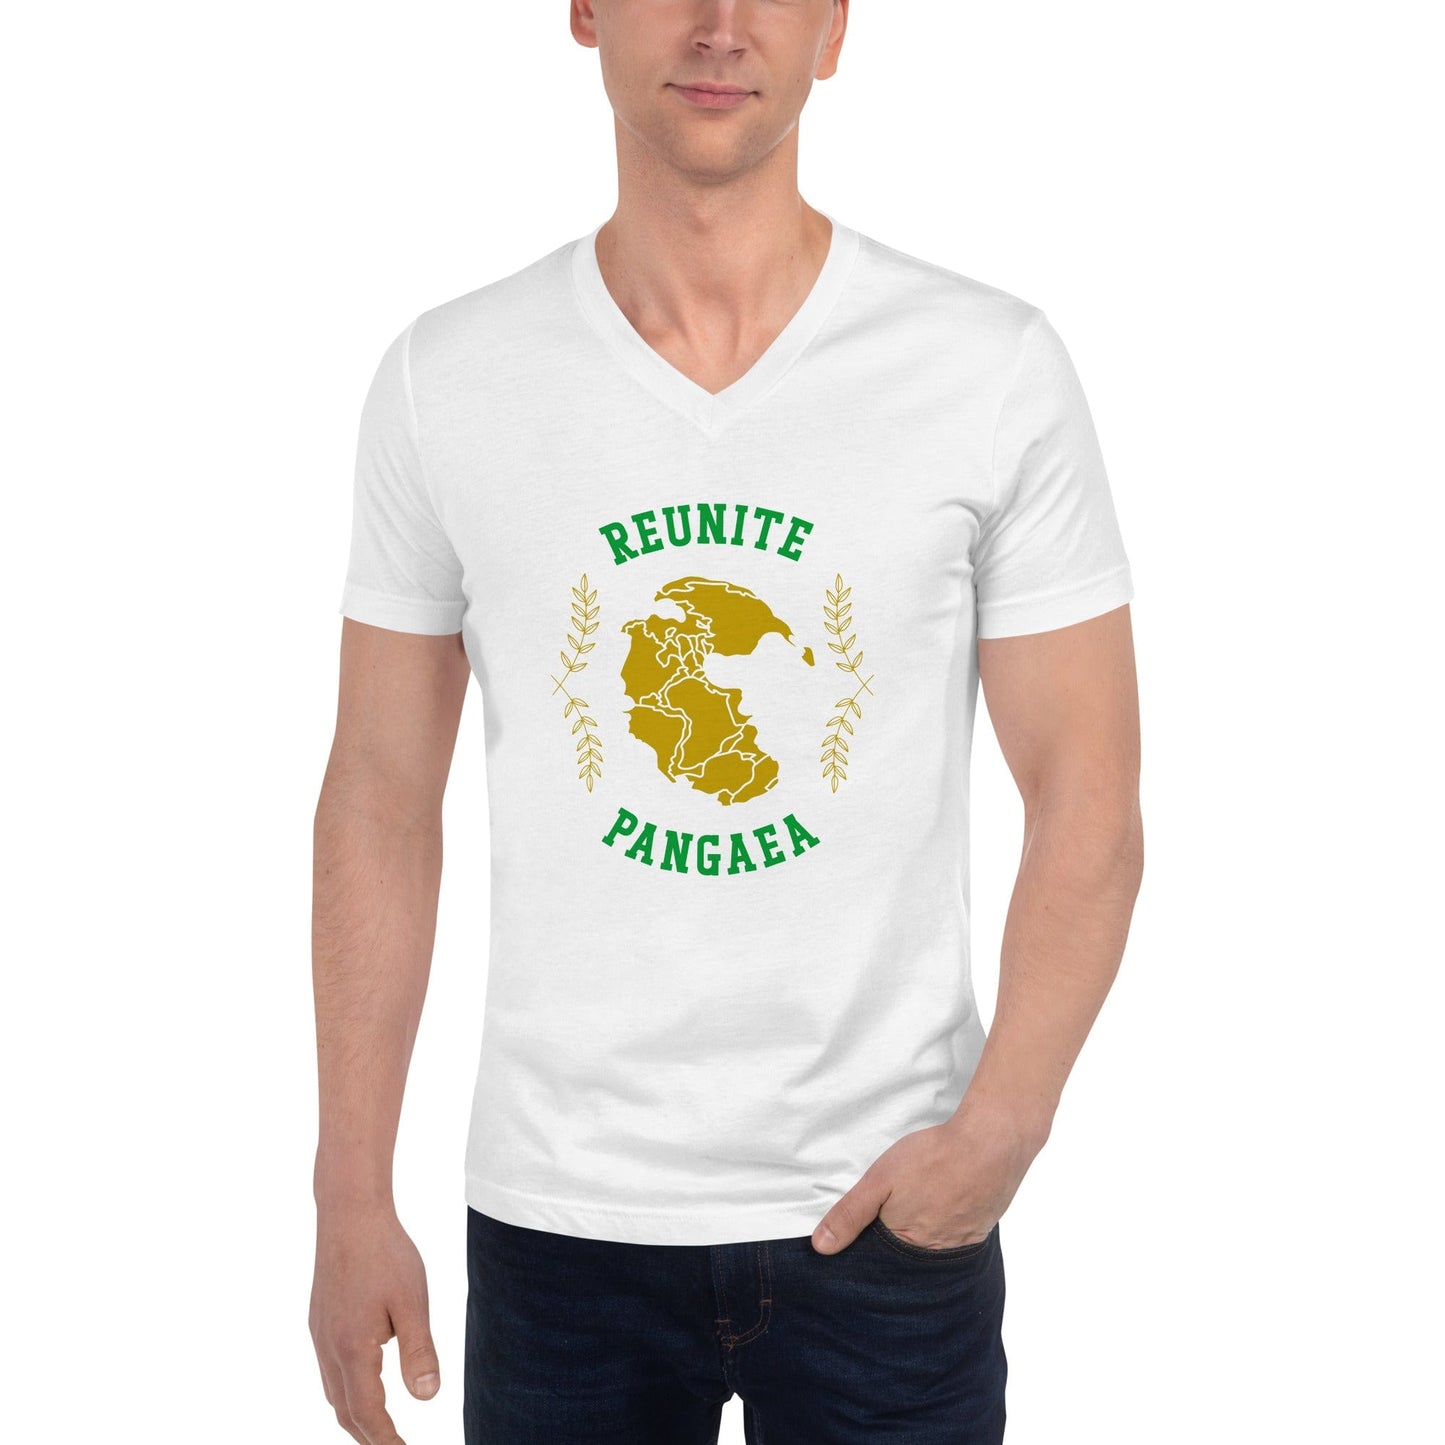 Reunite Pangaea - Unisex V-Neck T-Shirt